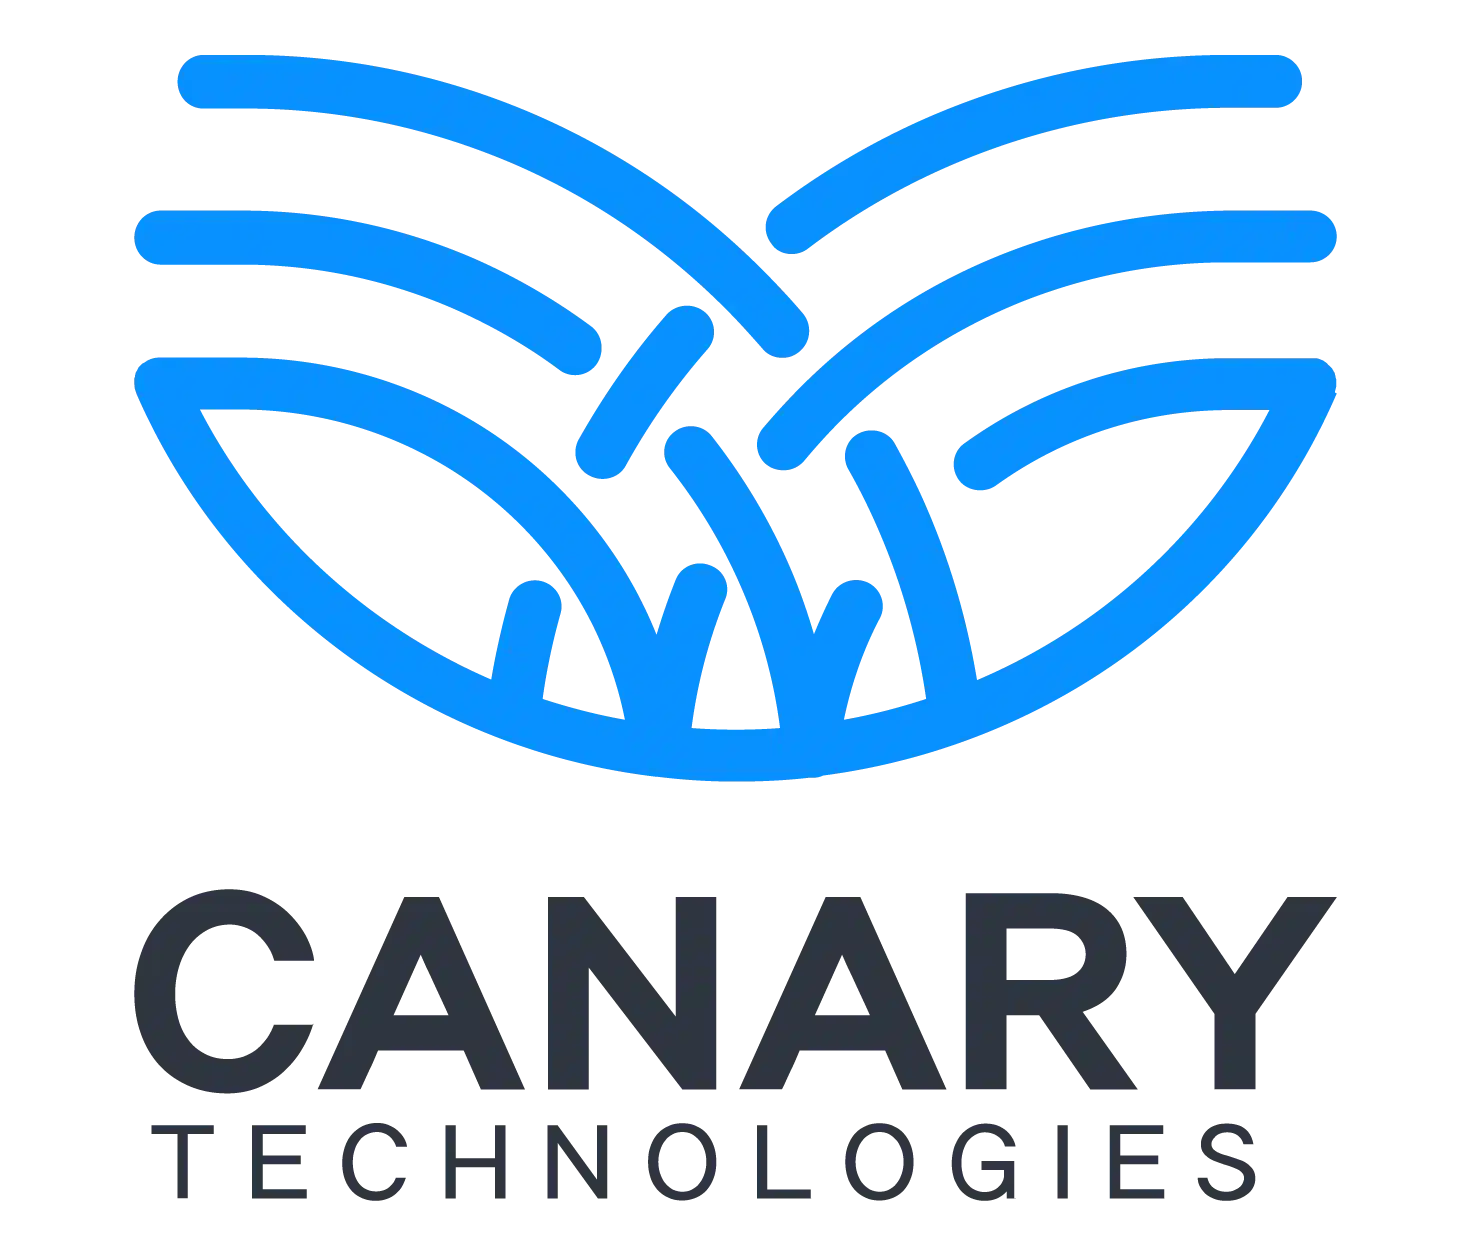 Canary Technologies